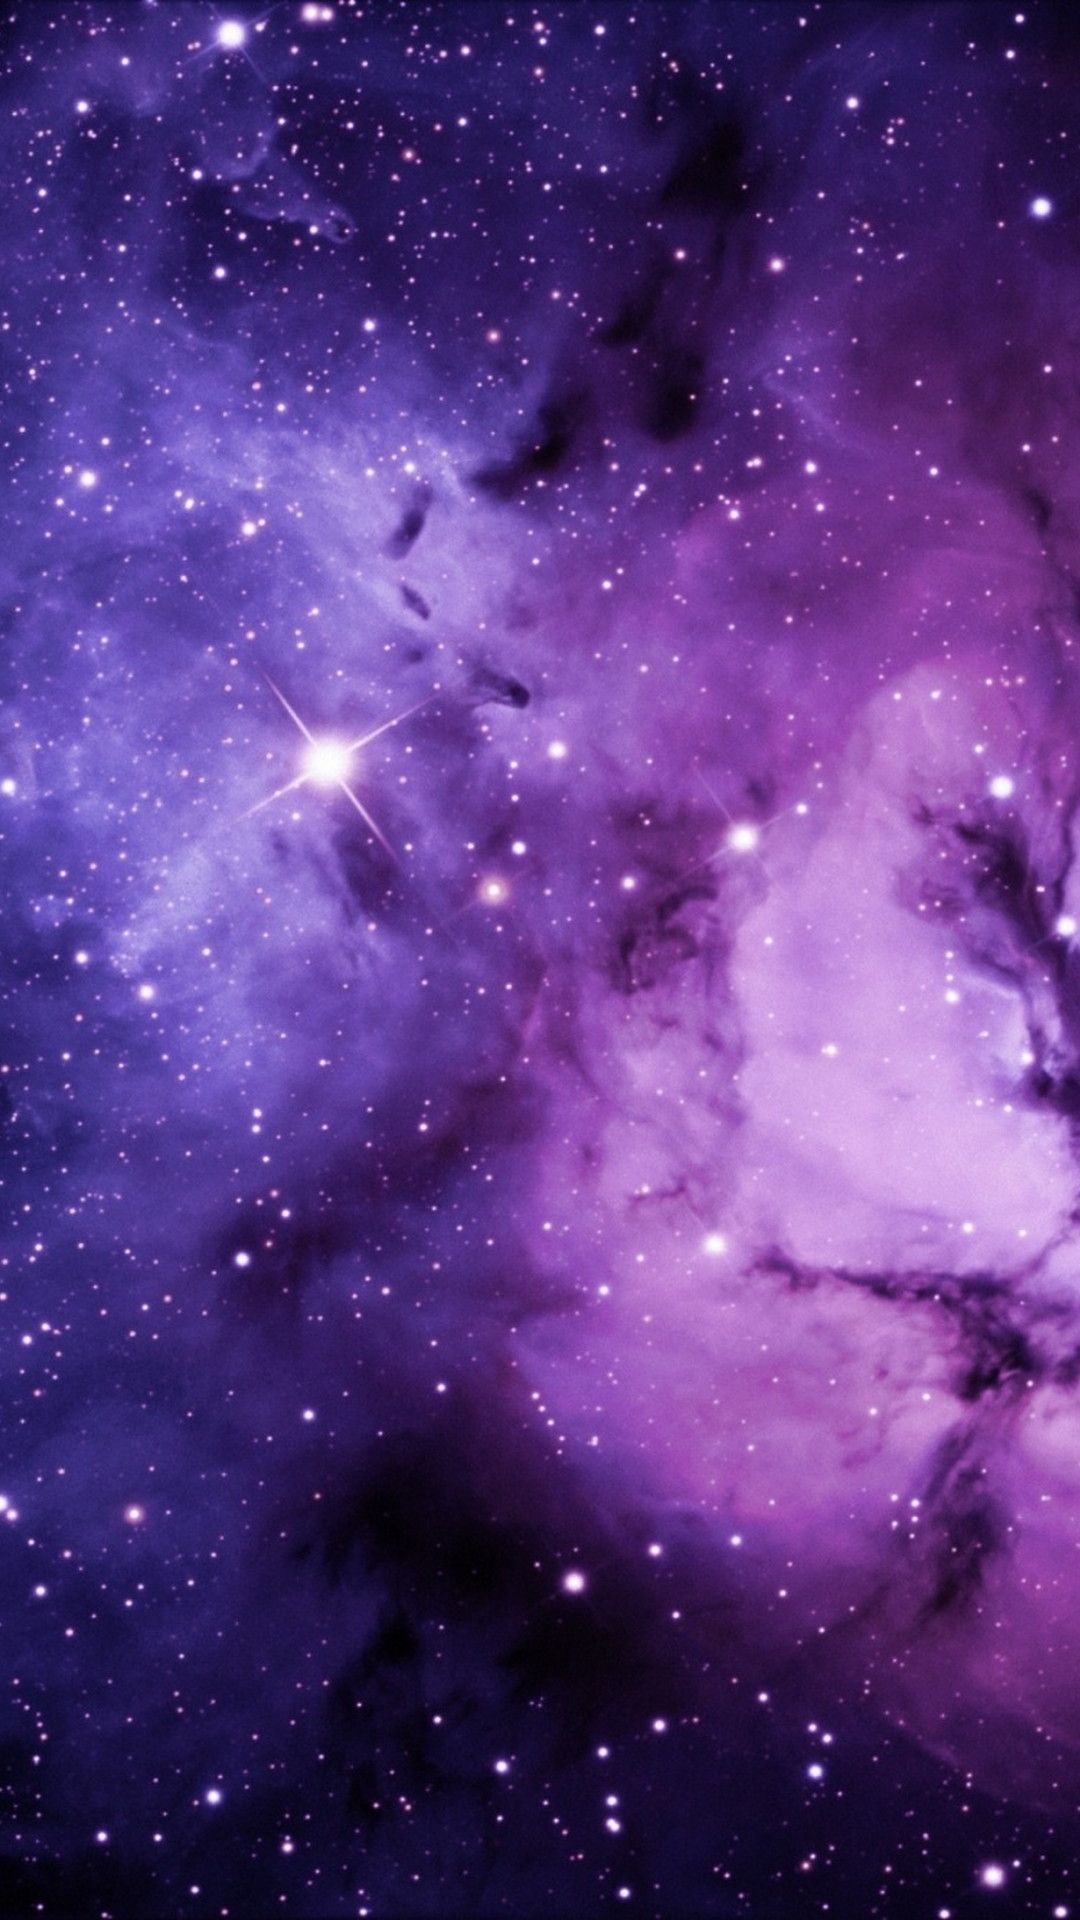 IPhone wallpaper of a purple nebula with stars. - Cute iPhone, purple quotes, purple, cute purple, galaxy